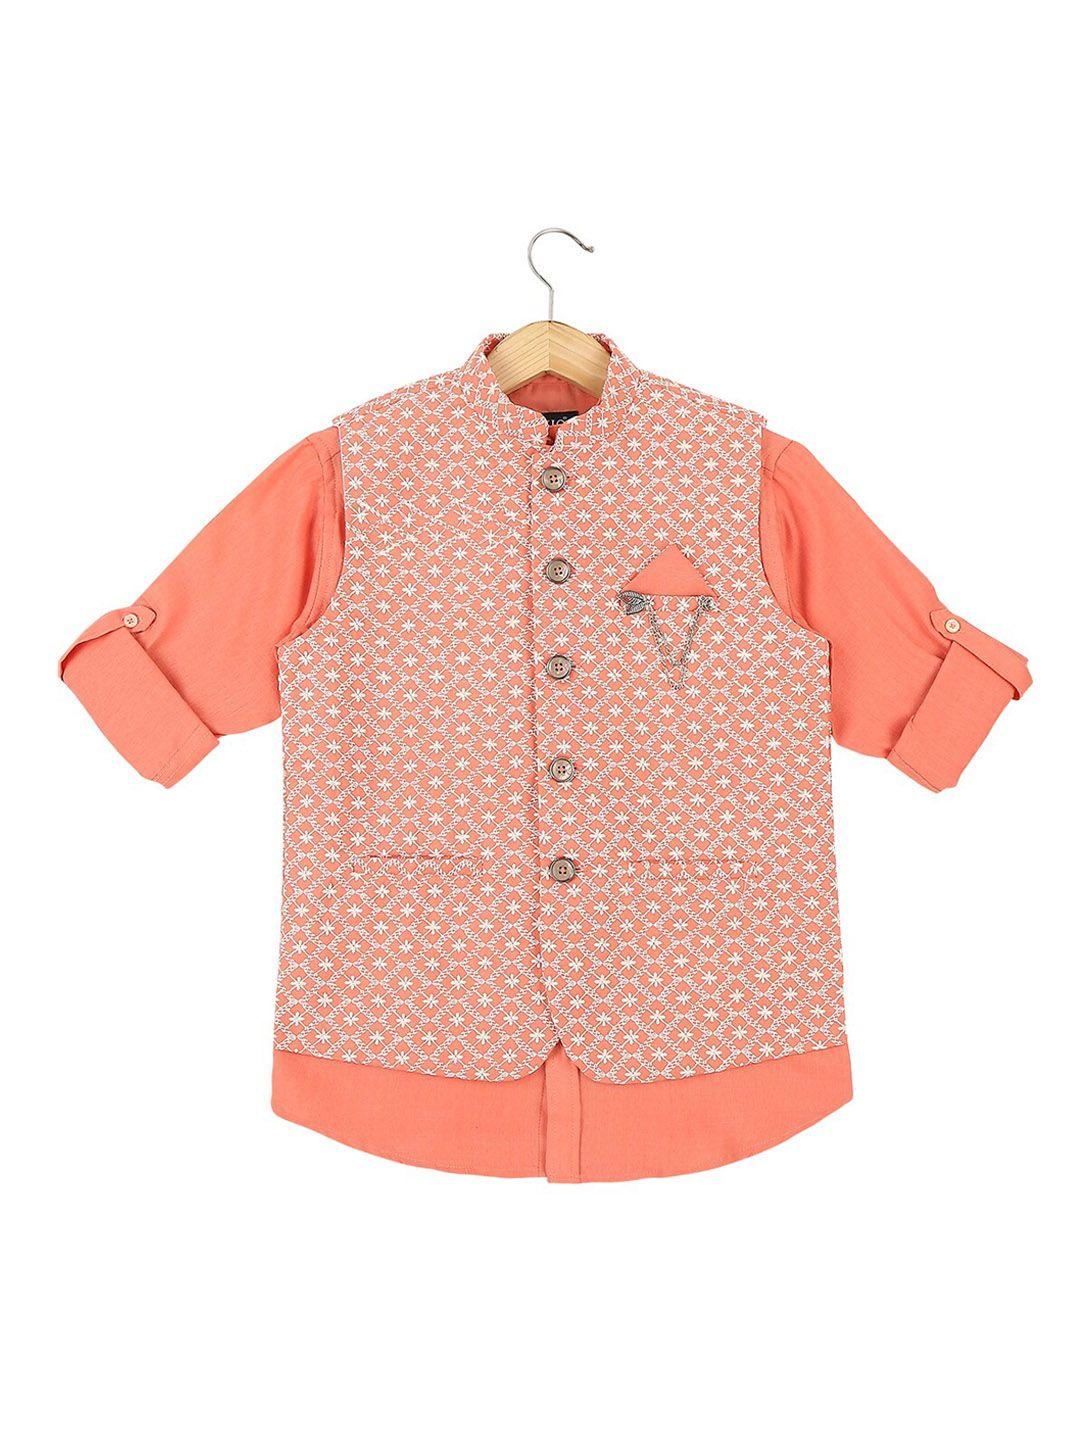 cavio boys peach-colored schiffli nehru jacket with shirt